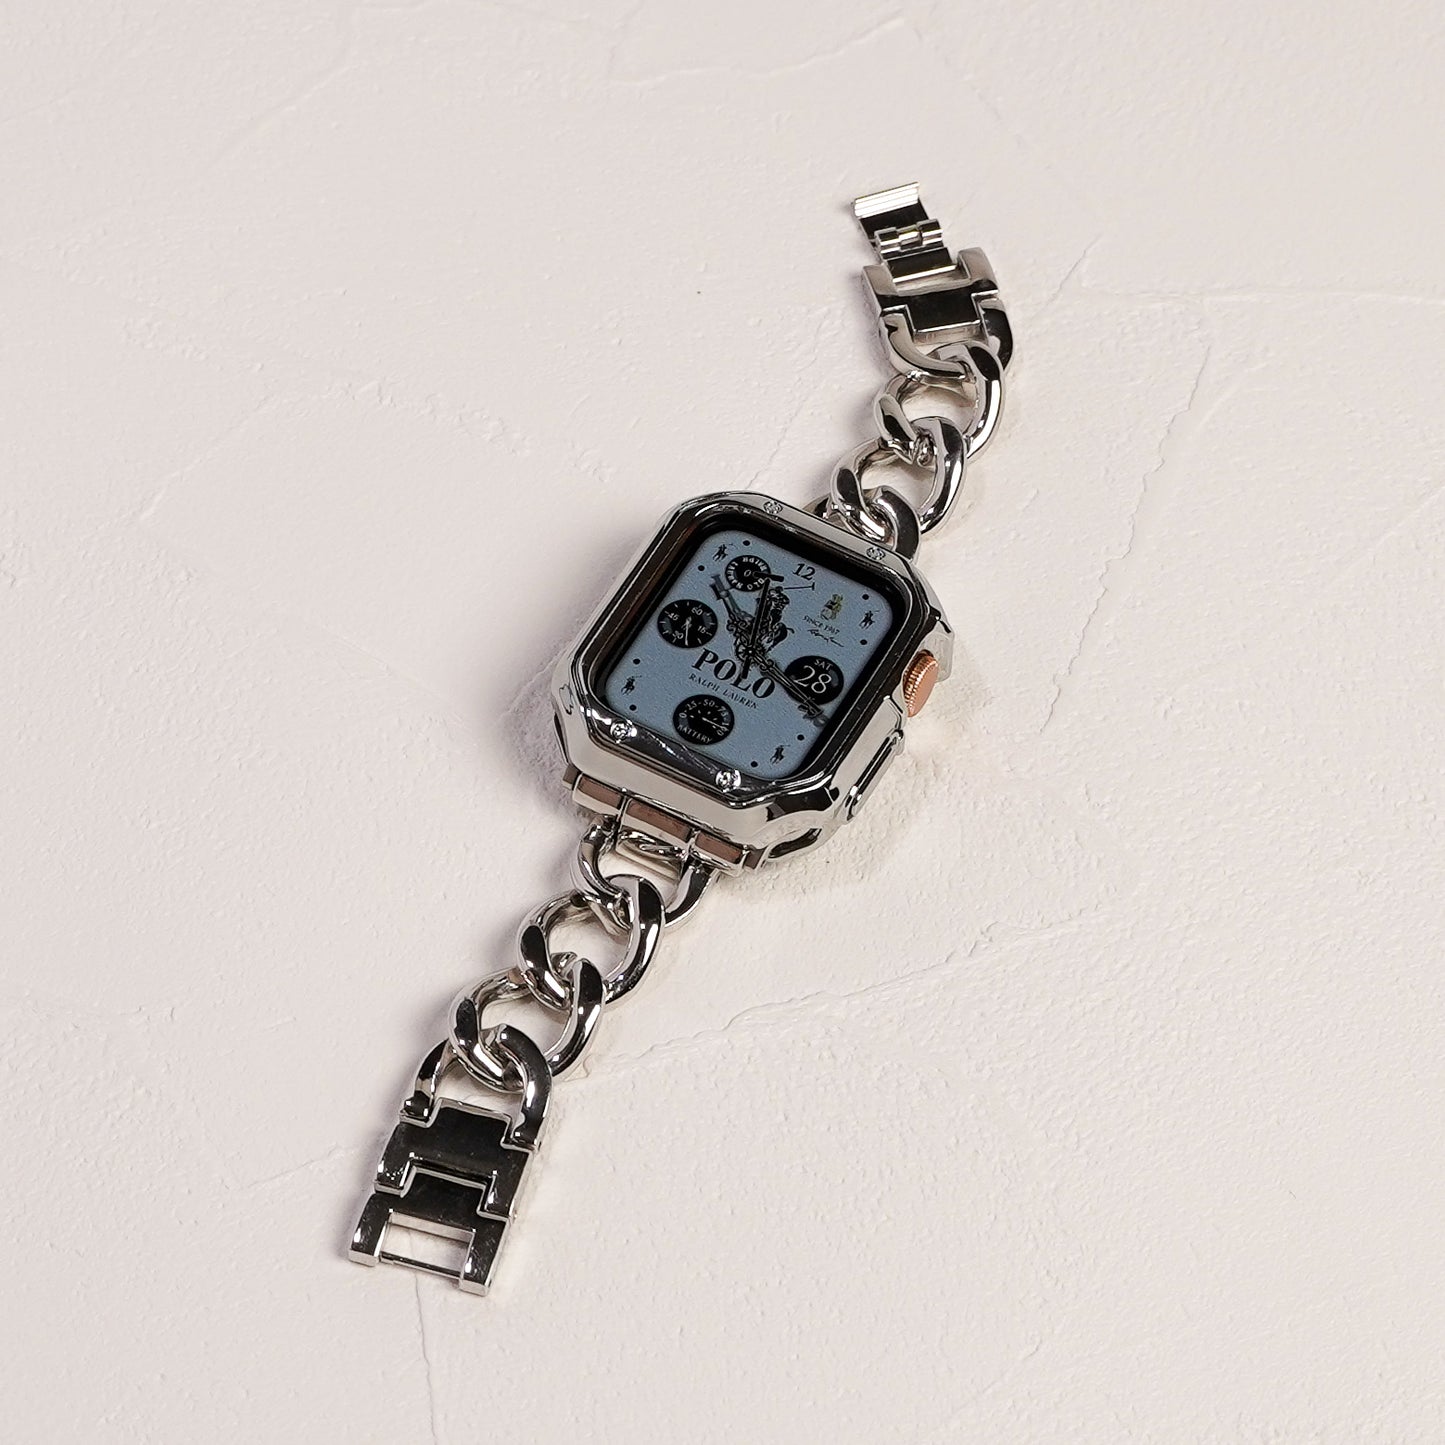 TPU メッキ スクエア 保護フレーム ソフトタイプ アップルウォッチ ハーフカバー Apple Watch